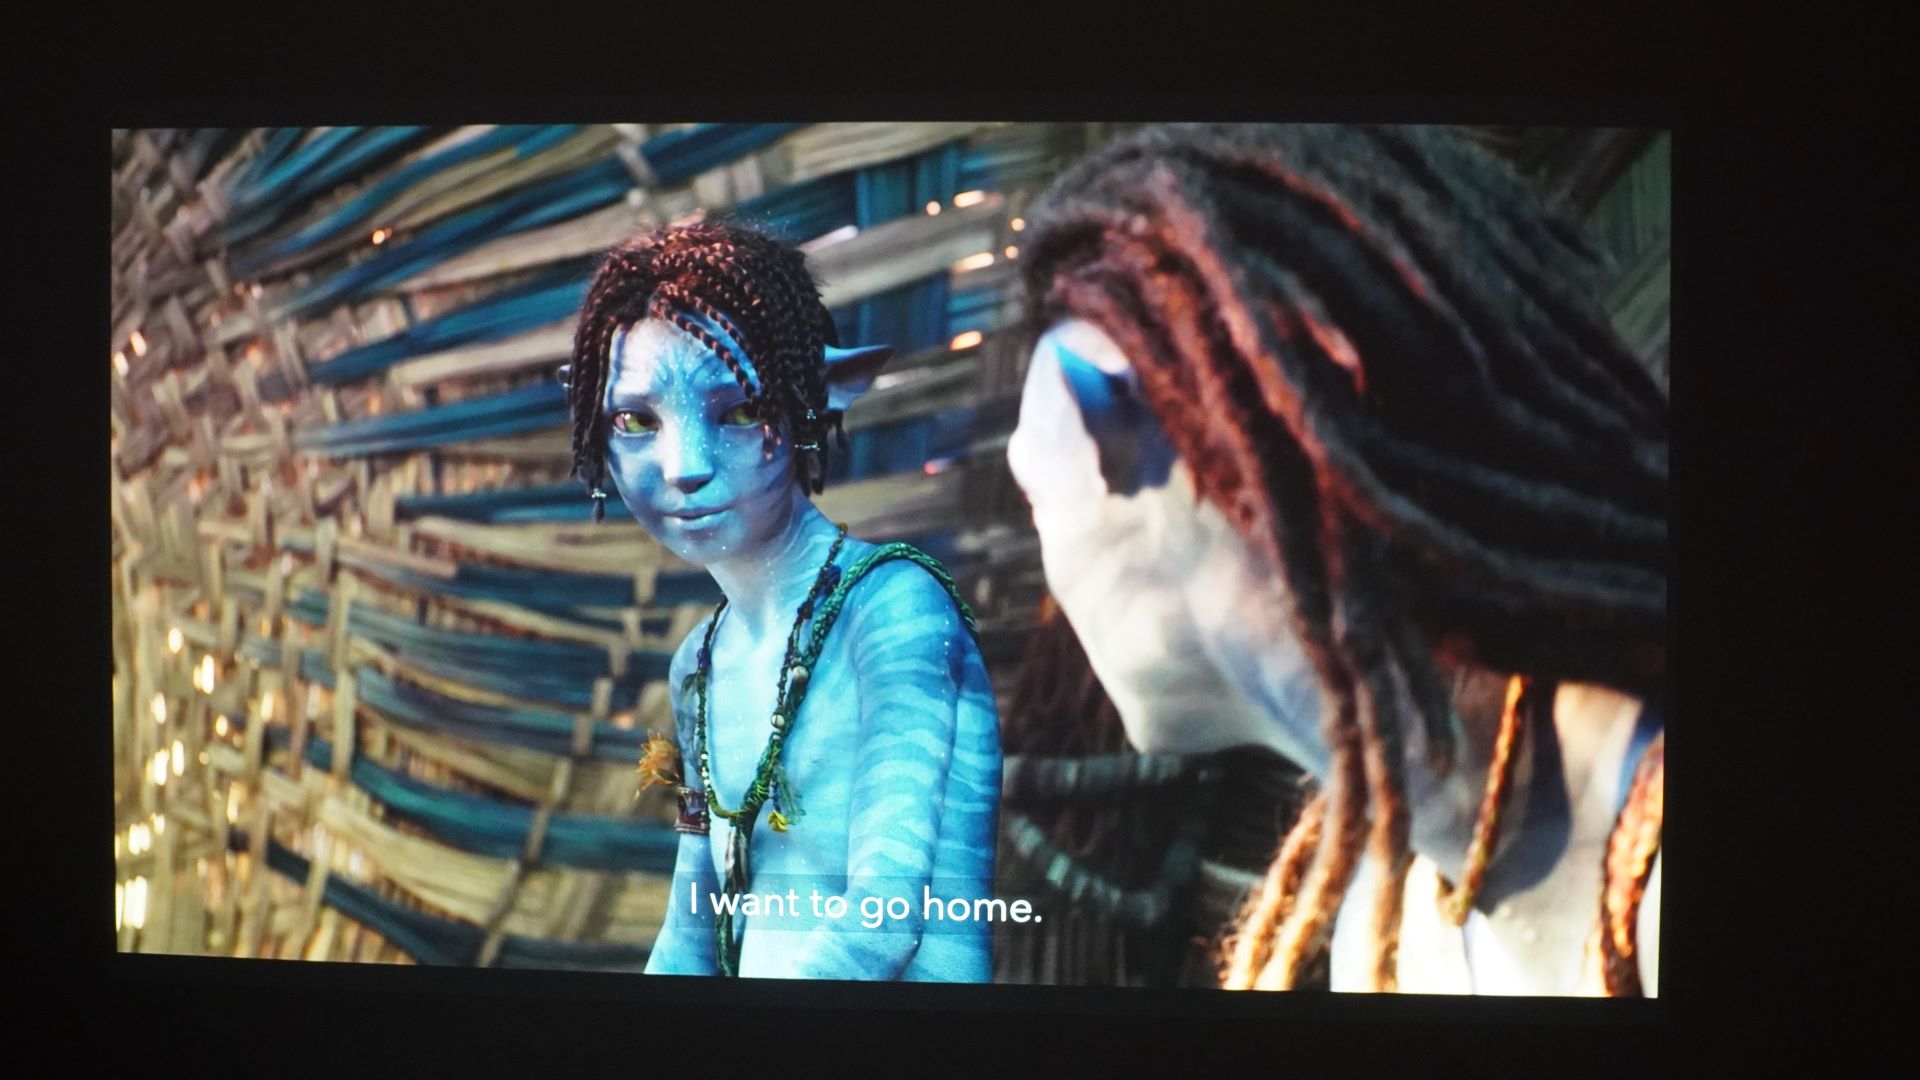 BenQ X3100i showing Avatar 2 on screen